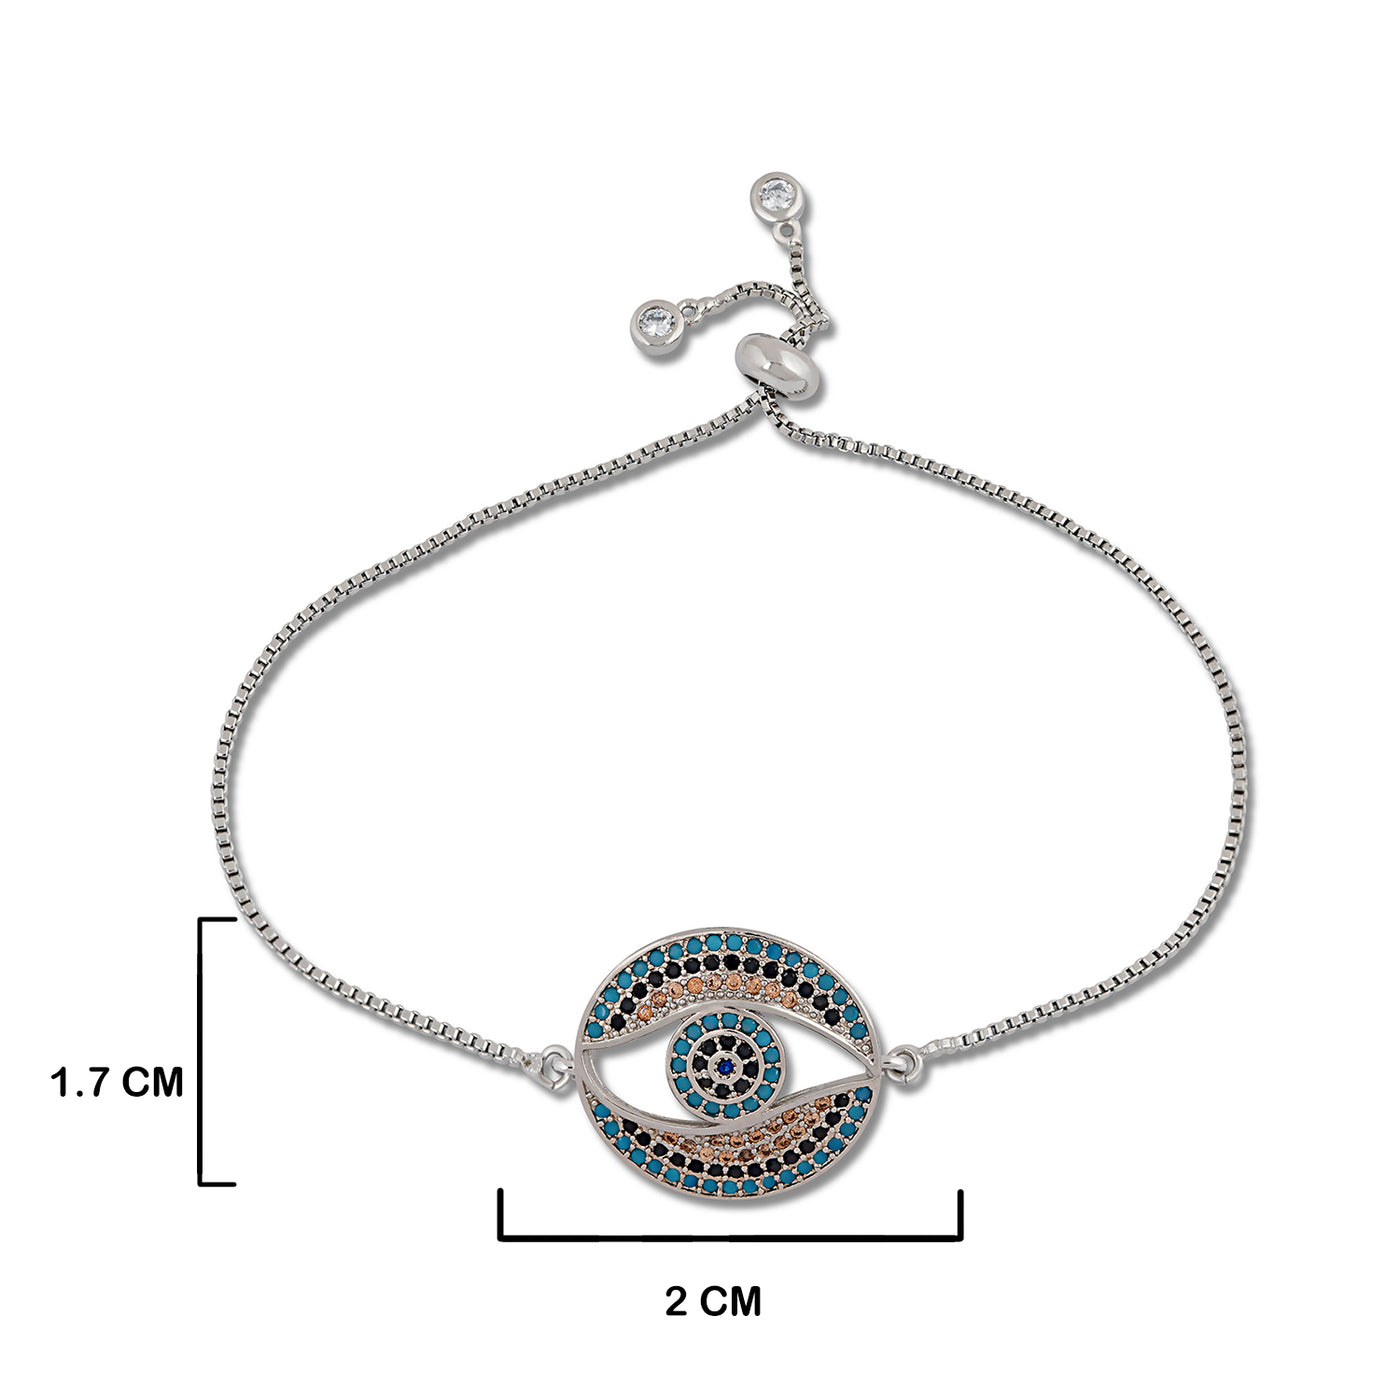 Beaded Evil Eye Bracelet with measurements in cm.